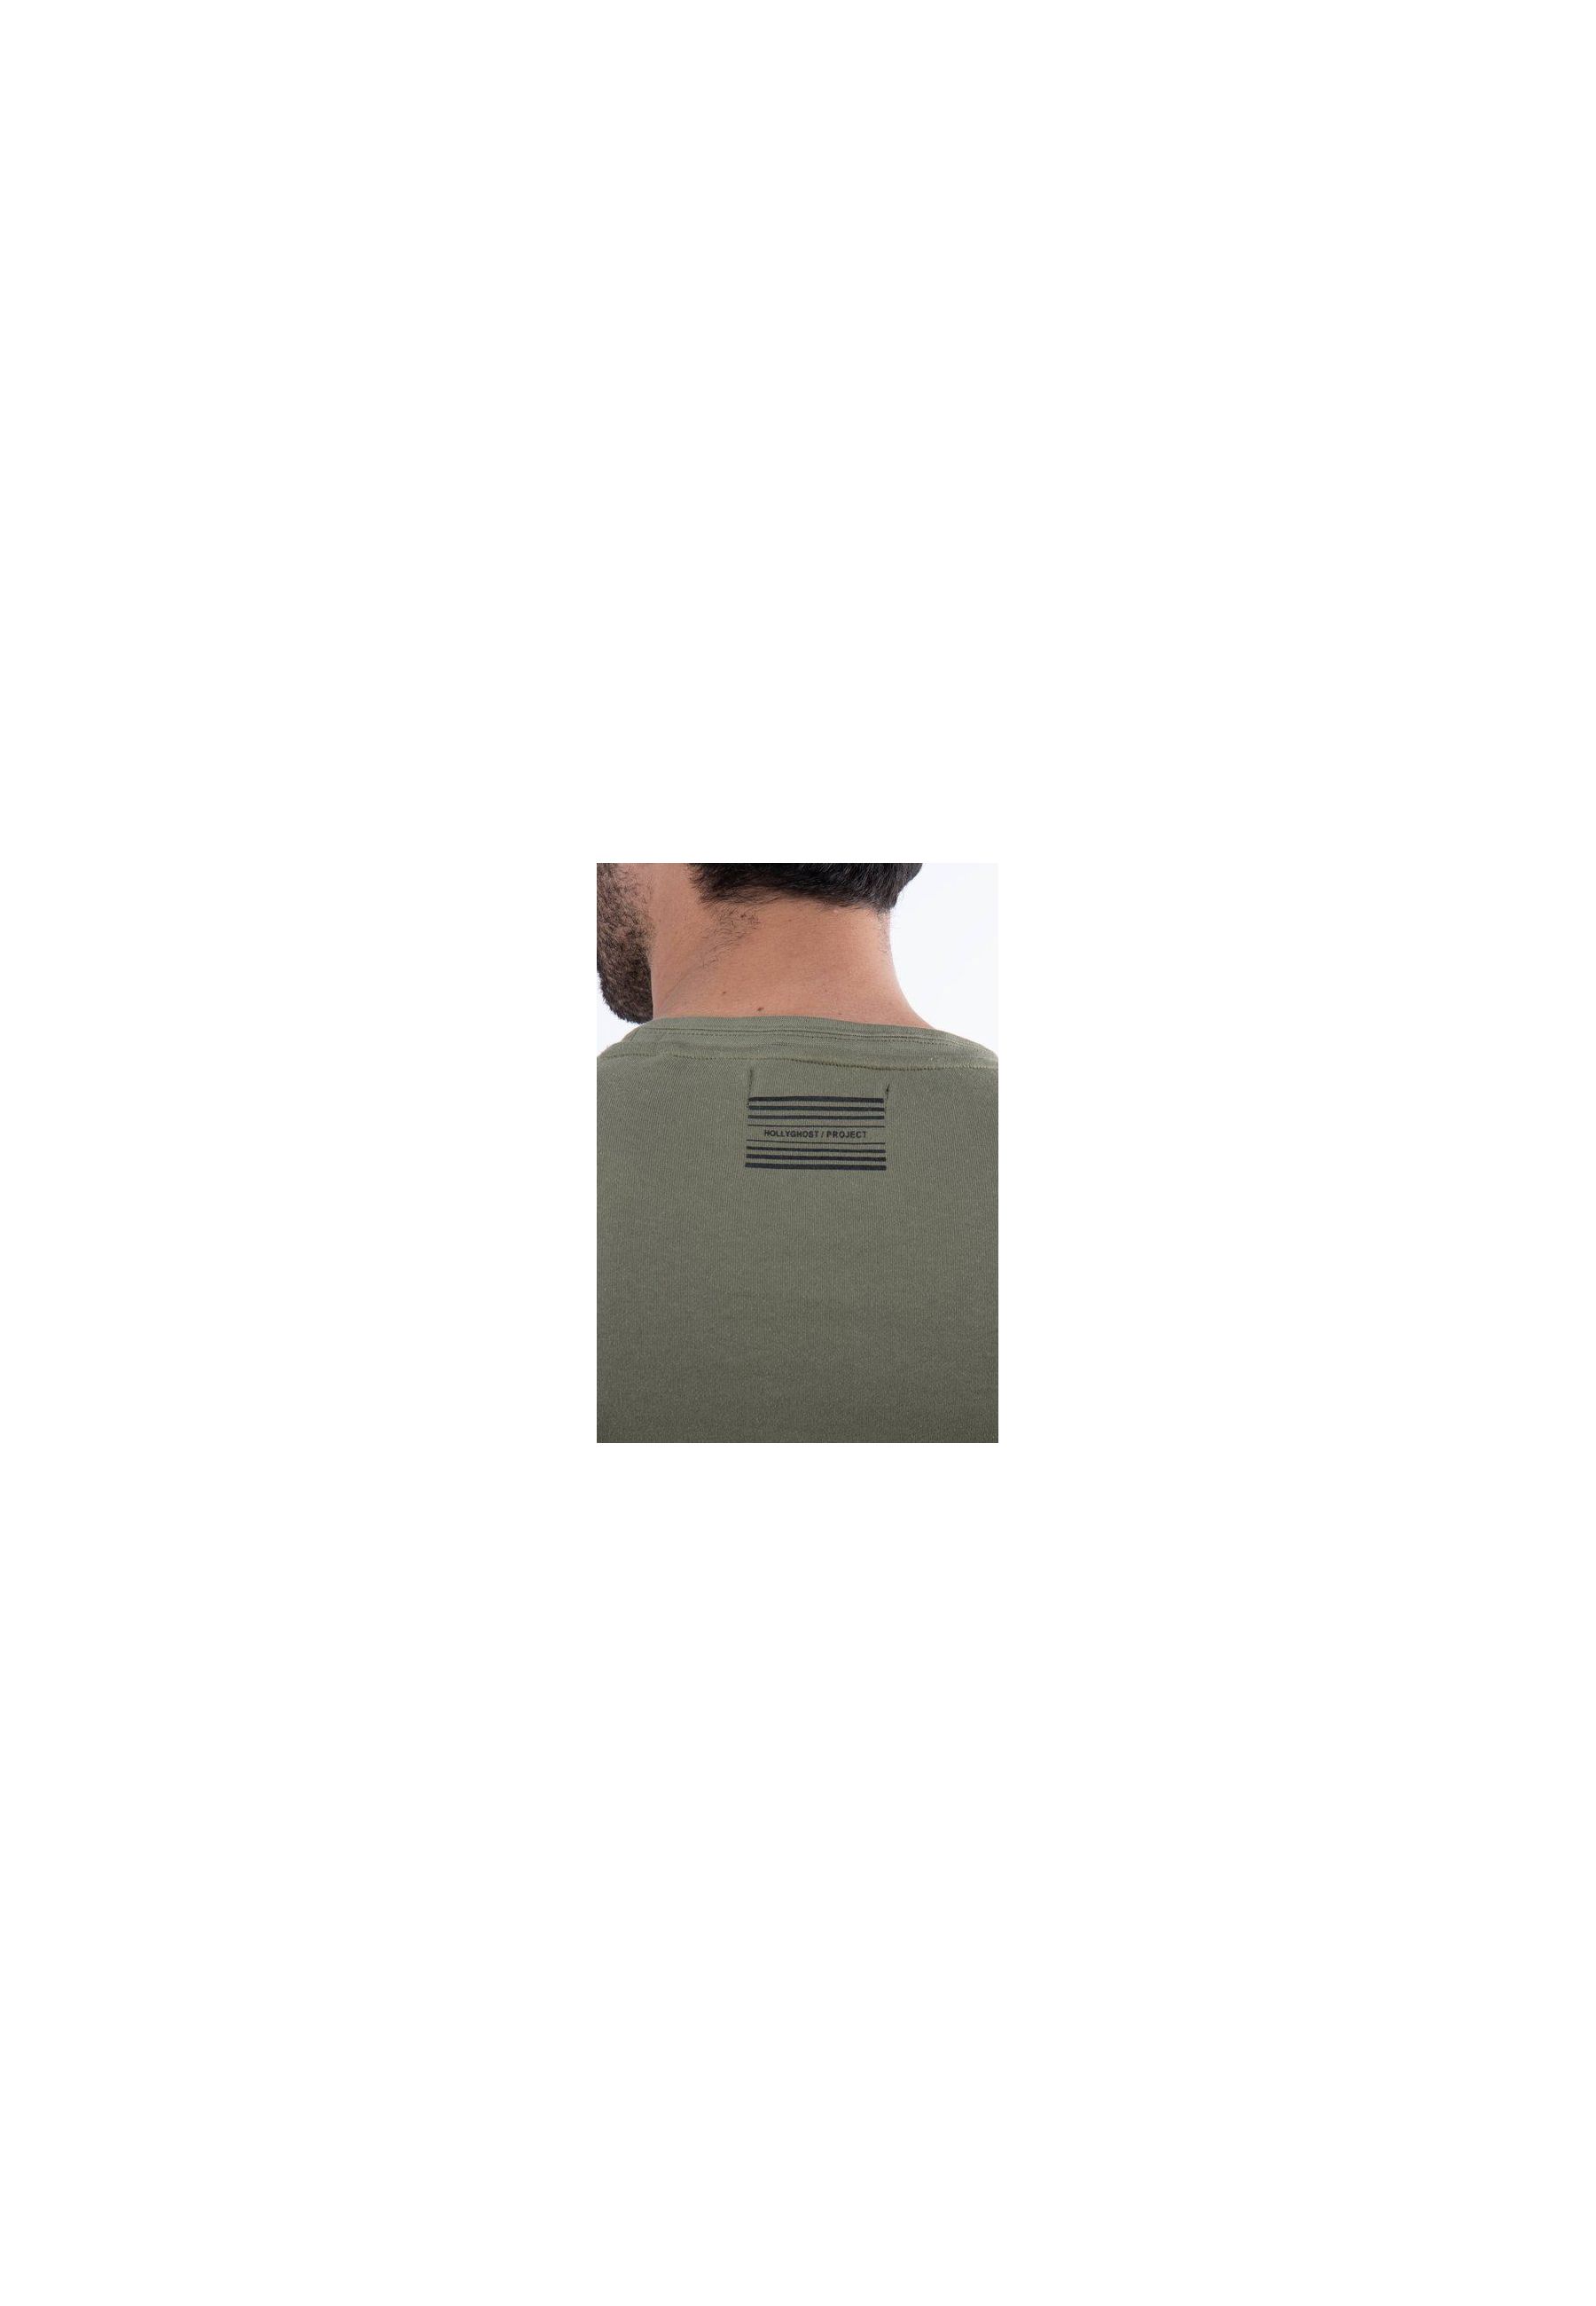 T-shirt kaki avec triangle noir sur poitrine et inscription hollyghost